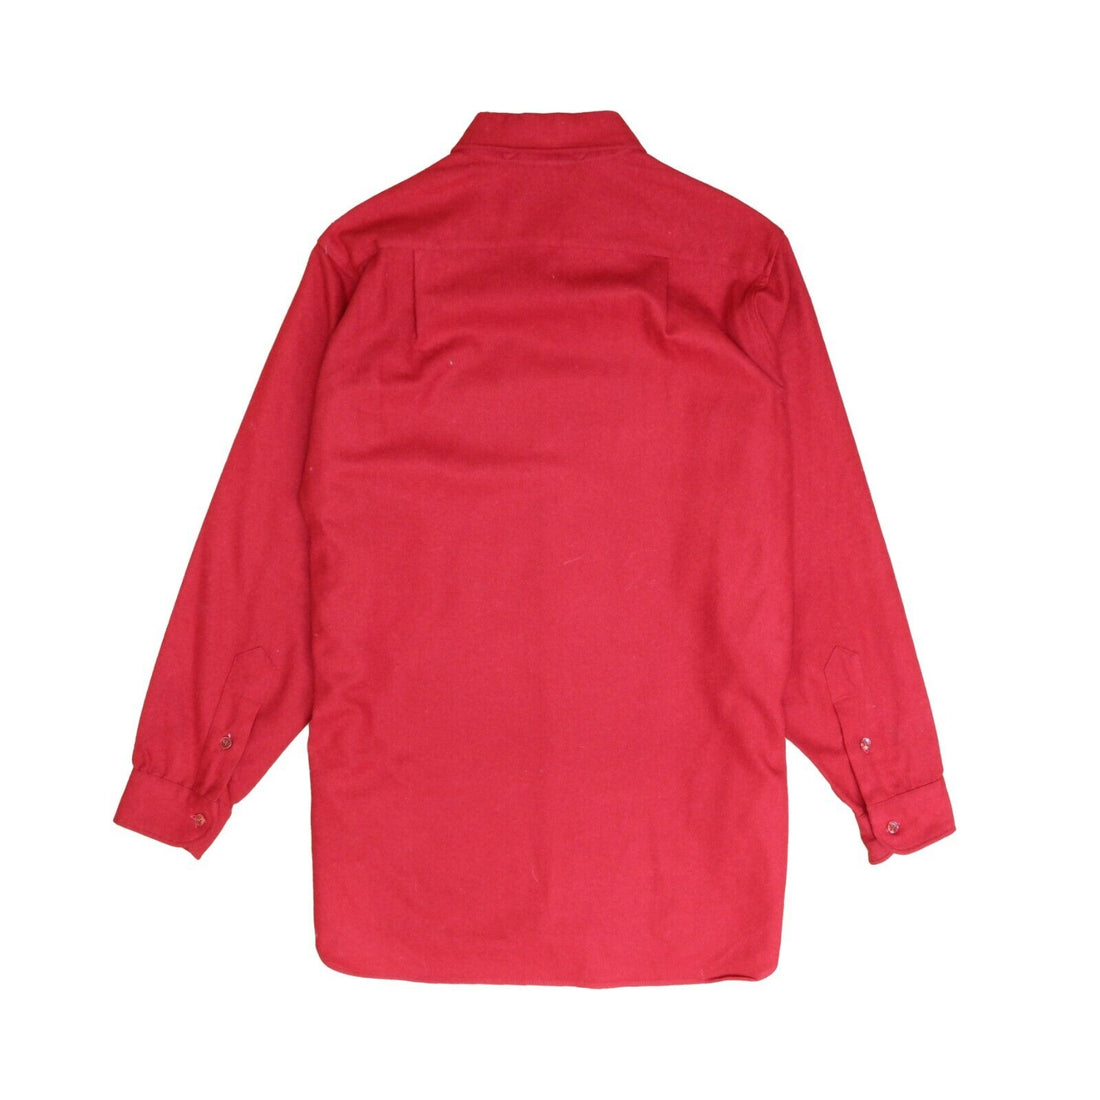 Vintage Pendleton Wool High Grade Western Button Up Shirt Size 16 Red